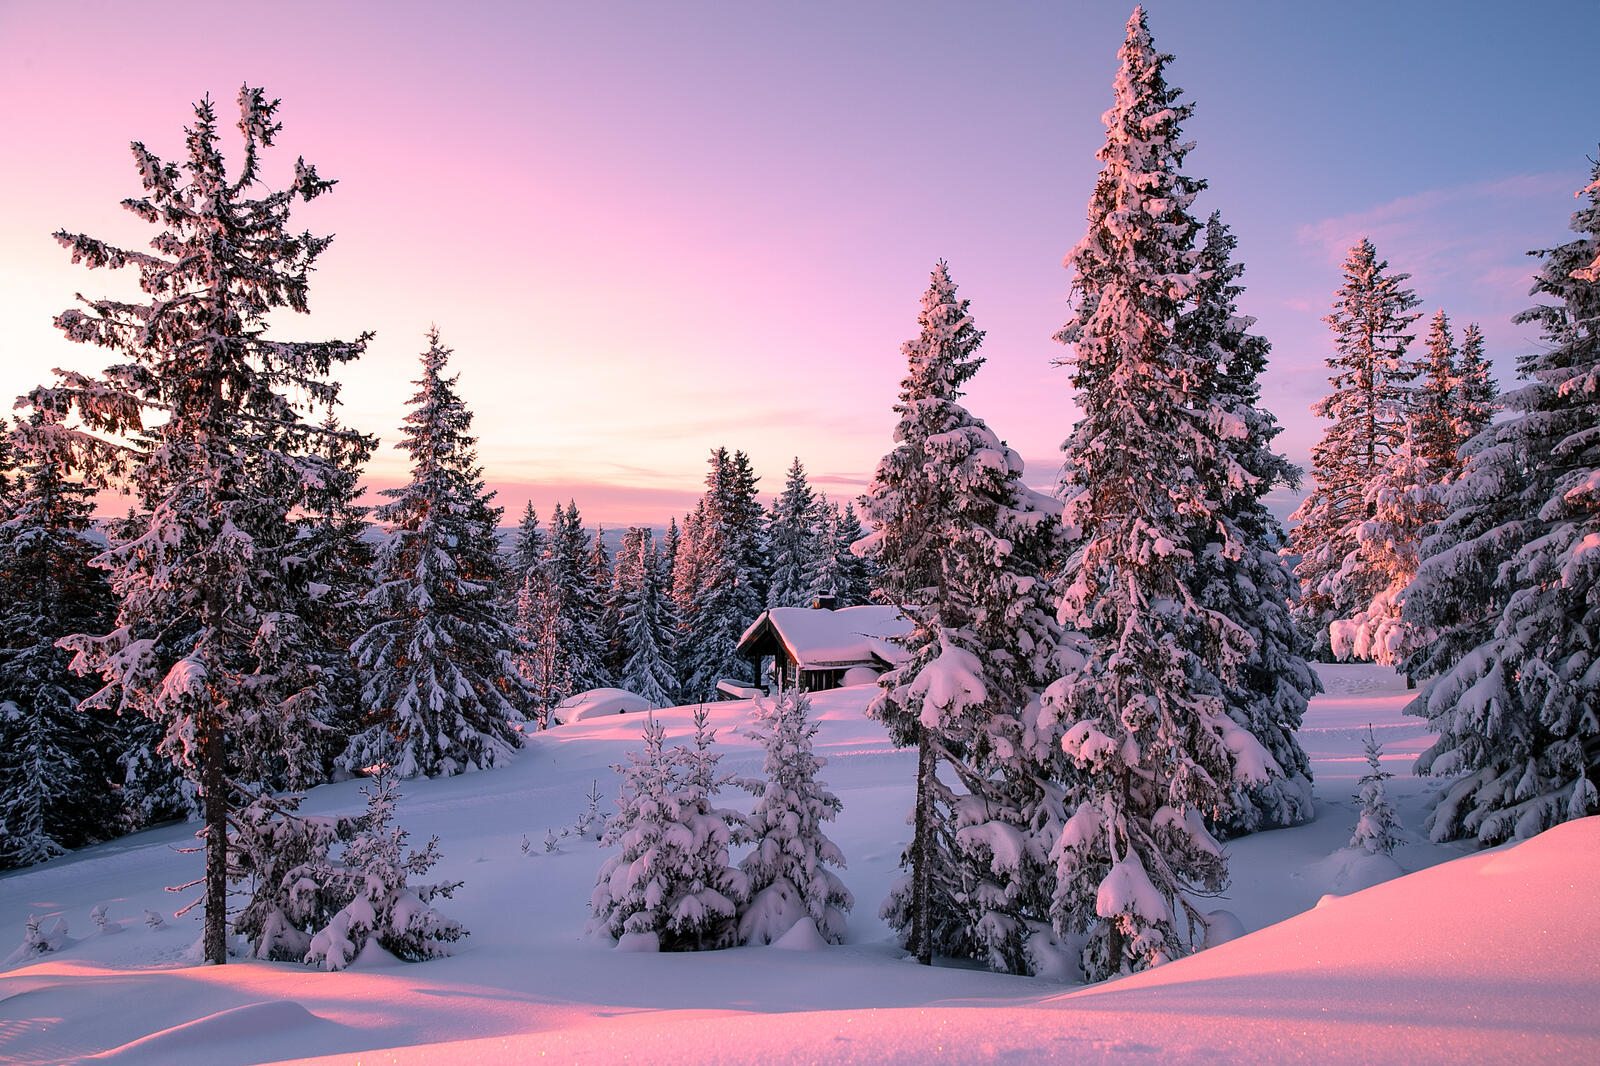 Обои Норвегия зимний лес снег на елках на рабочий стол